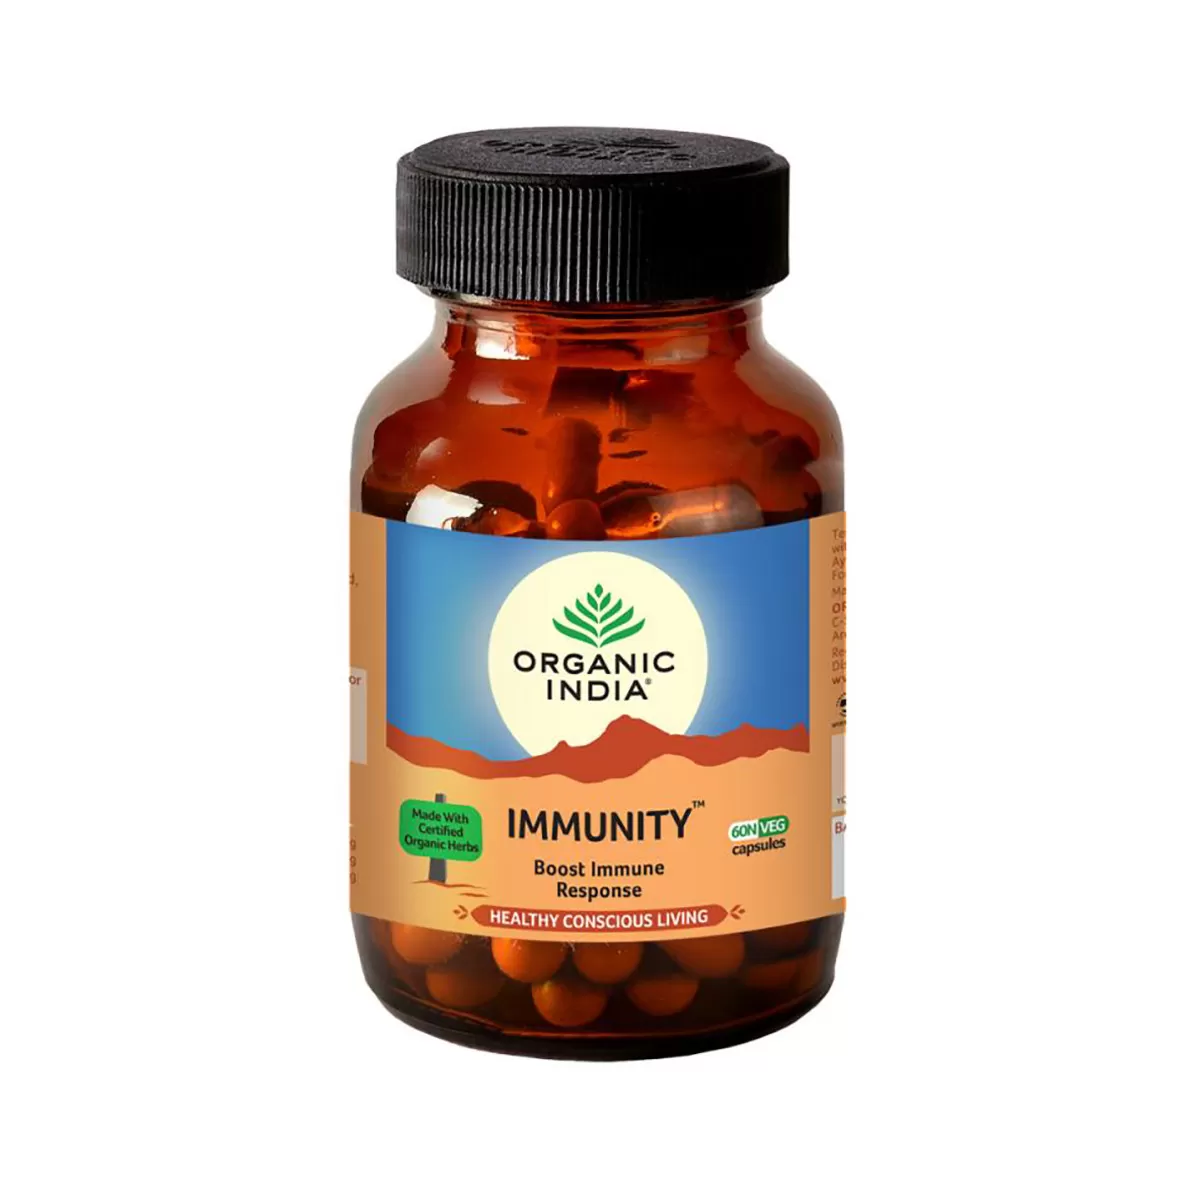 Immunity organic india, 90 cps 